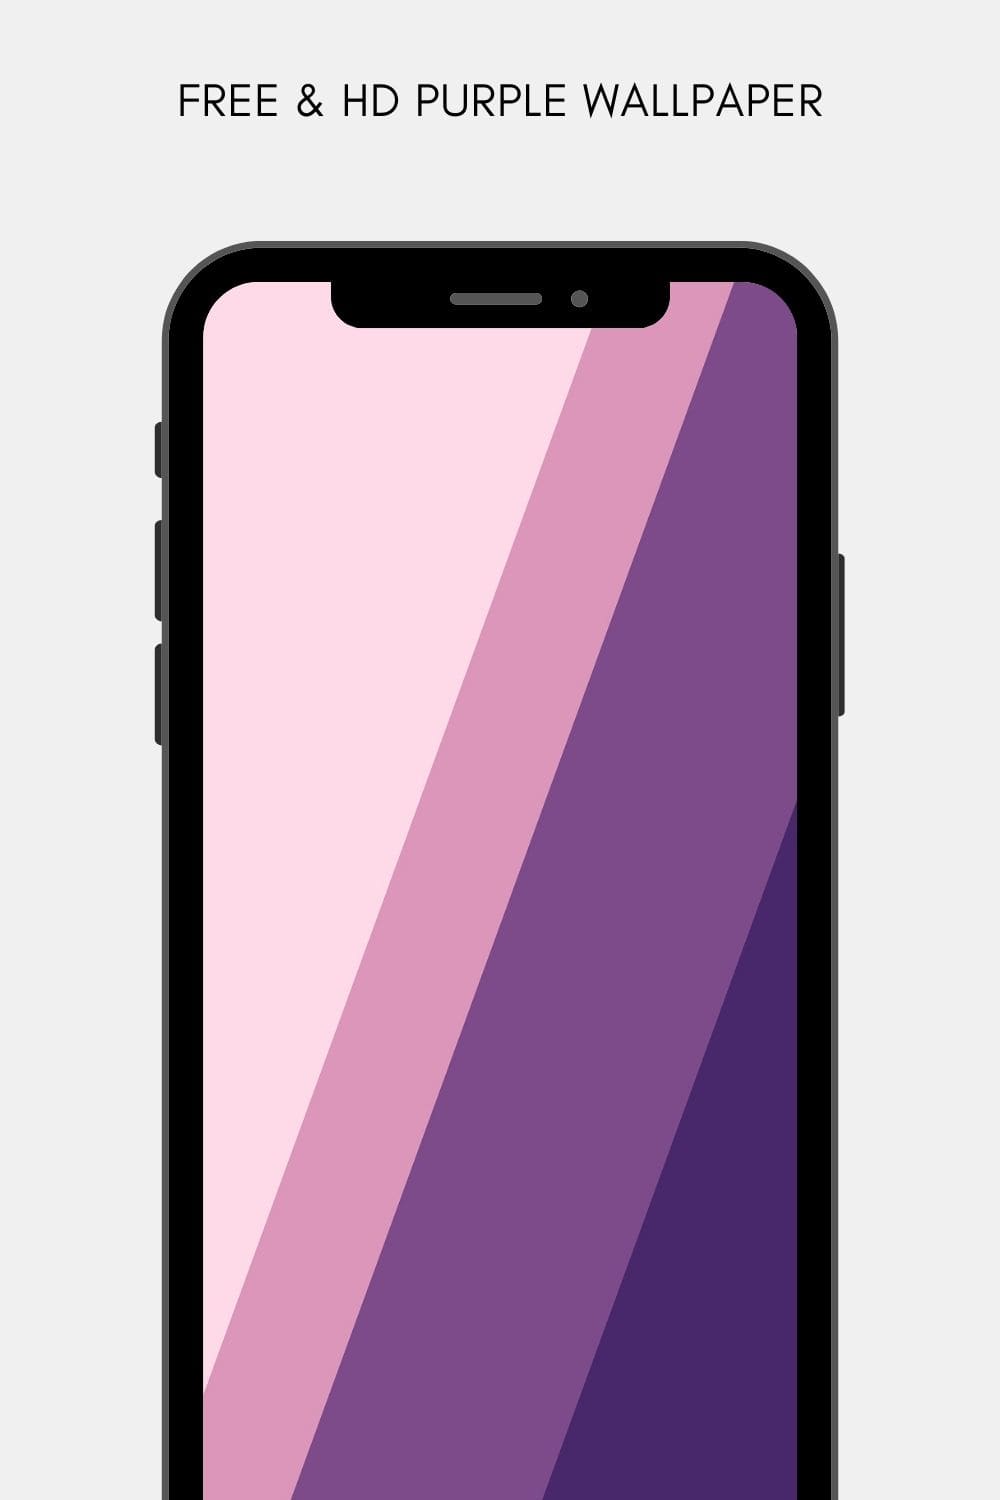 HD Purple Tone Phone Wallpaper